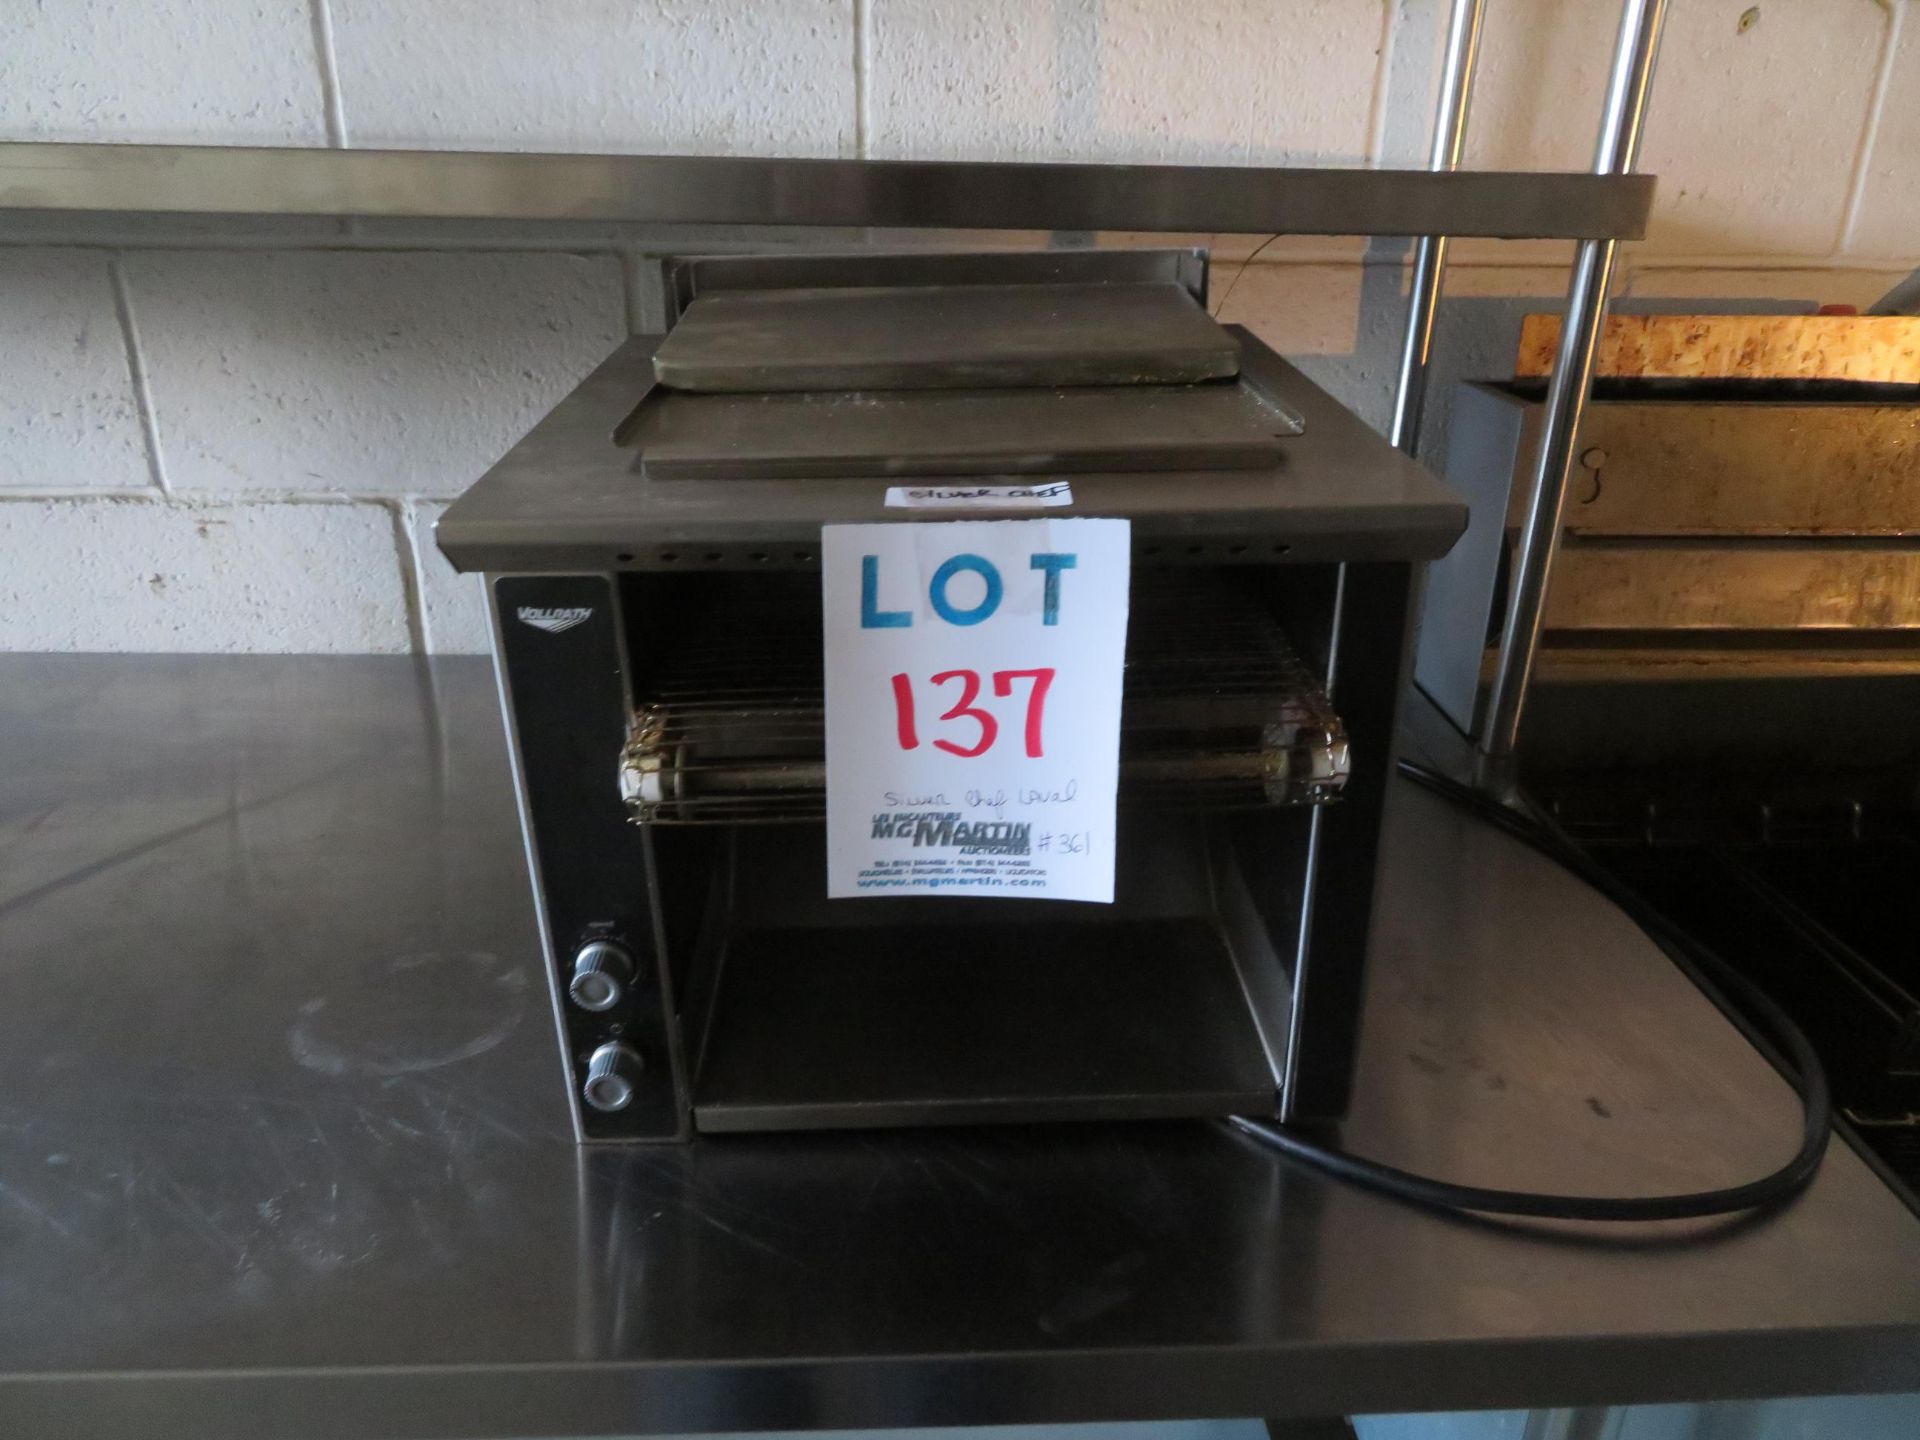 VOLLRATH conveyor toaster Mod # JT1-CT2